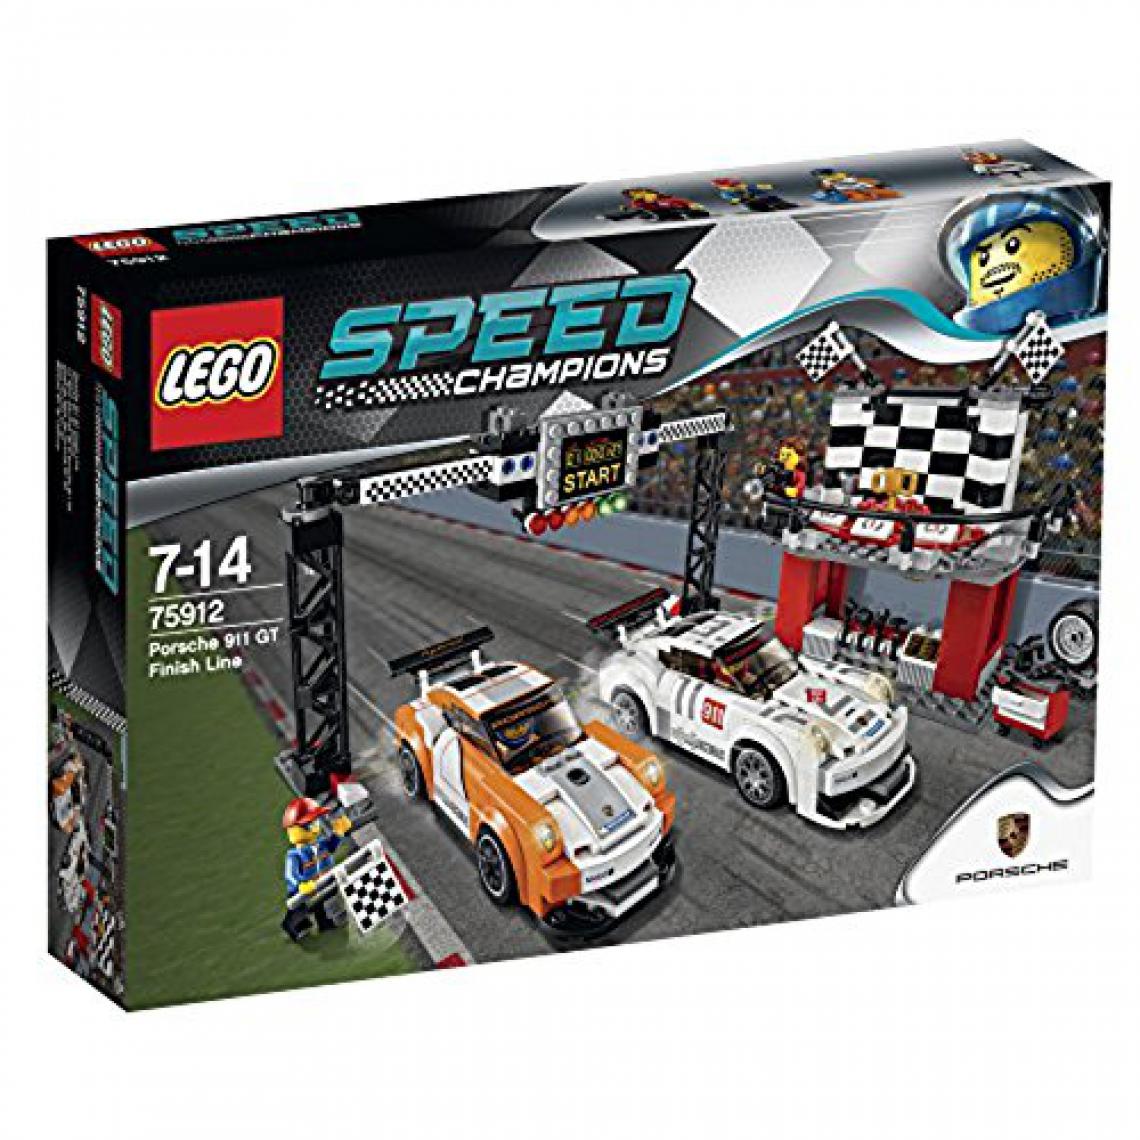 Lego - LEgO Speed ââchampions Porsche 911 gT Ligne d'arrivée 75912 - Briques et blocs